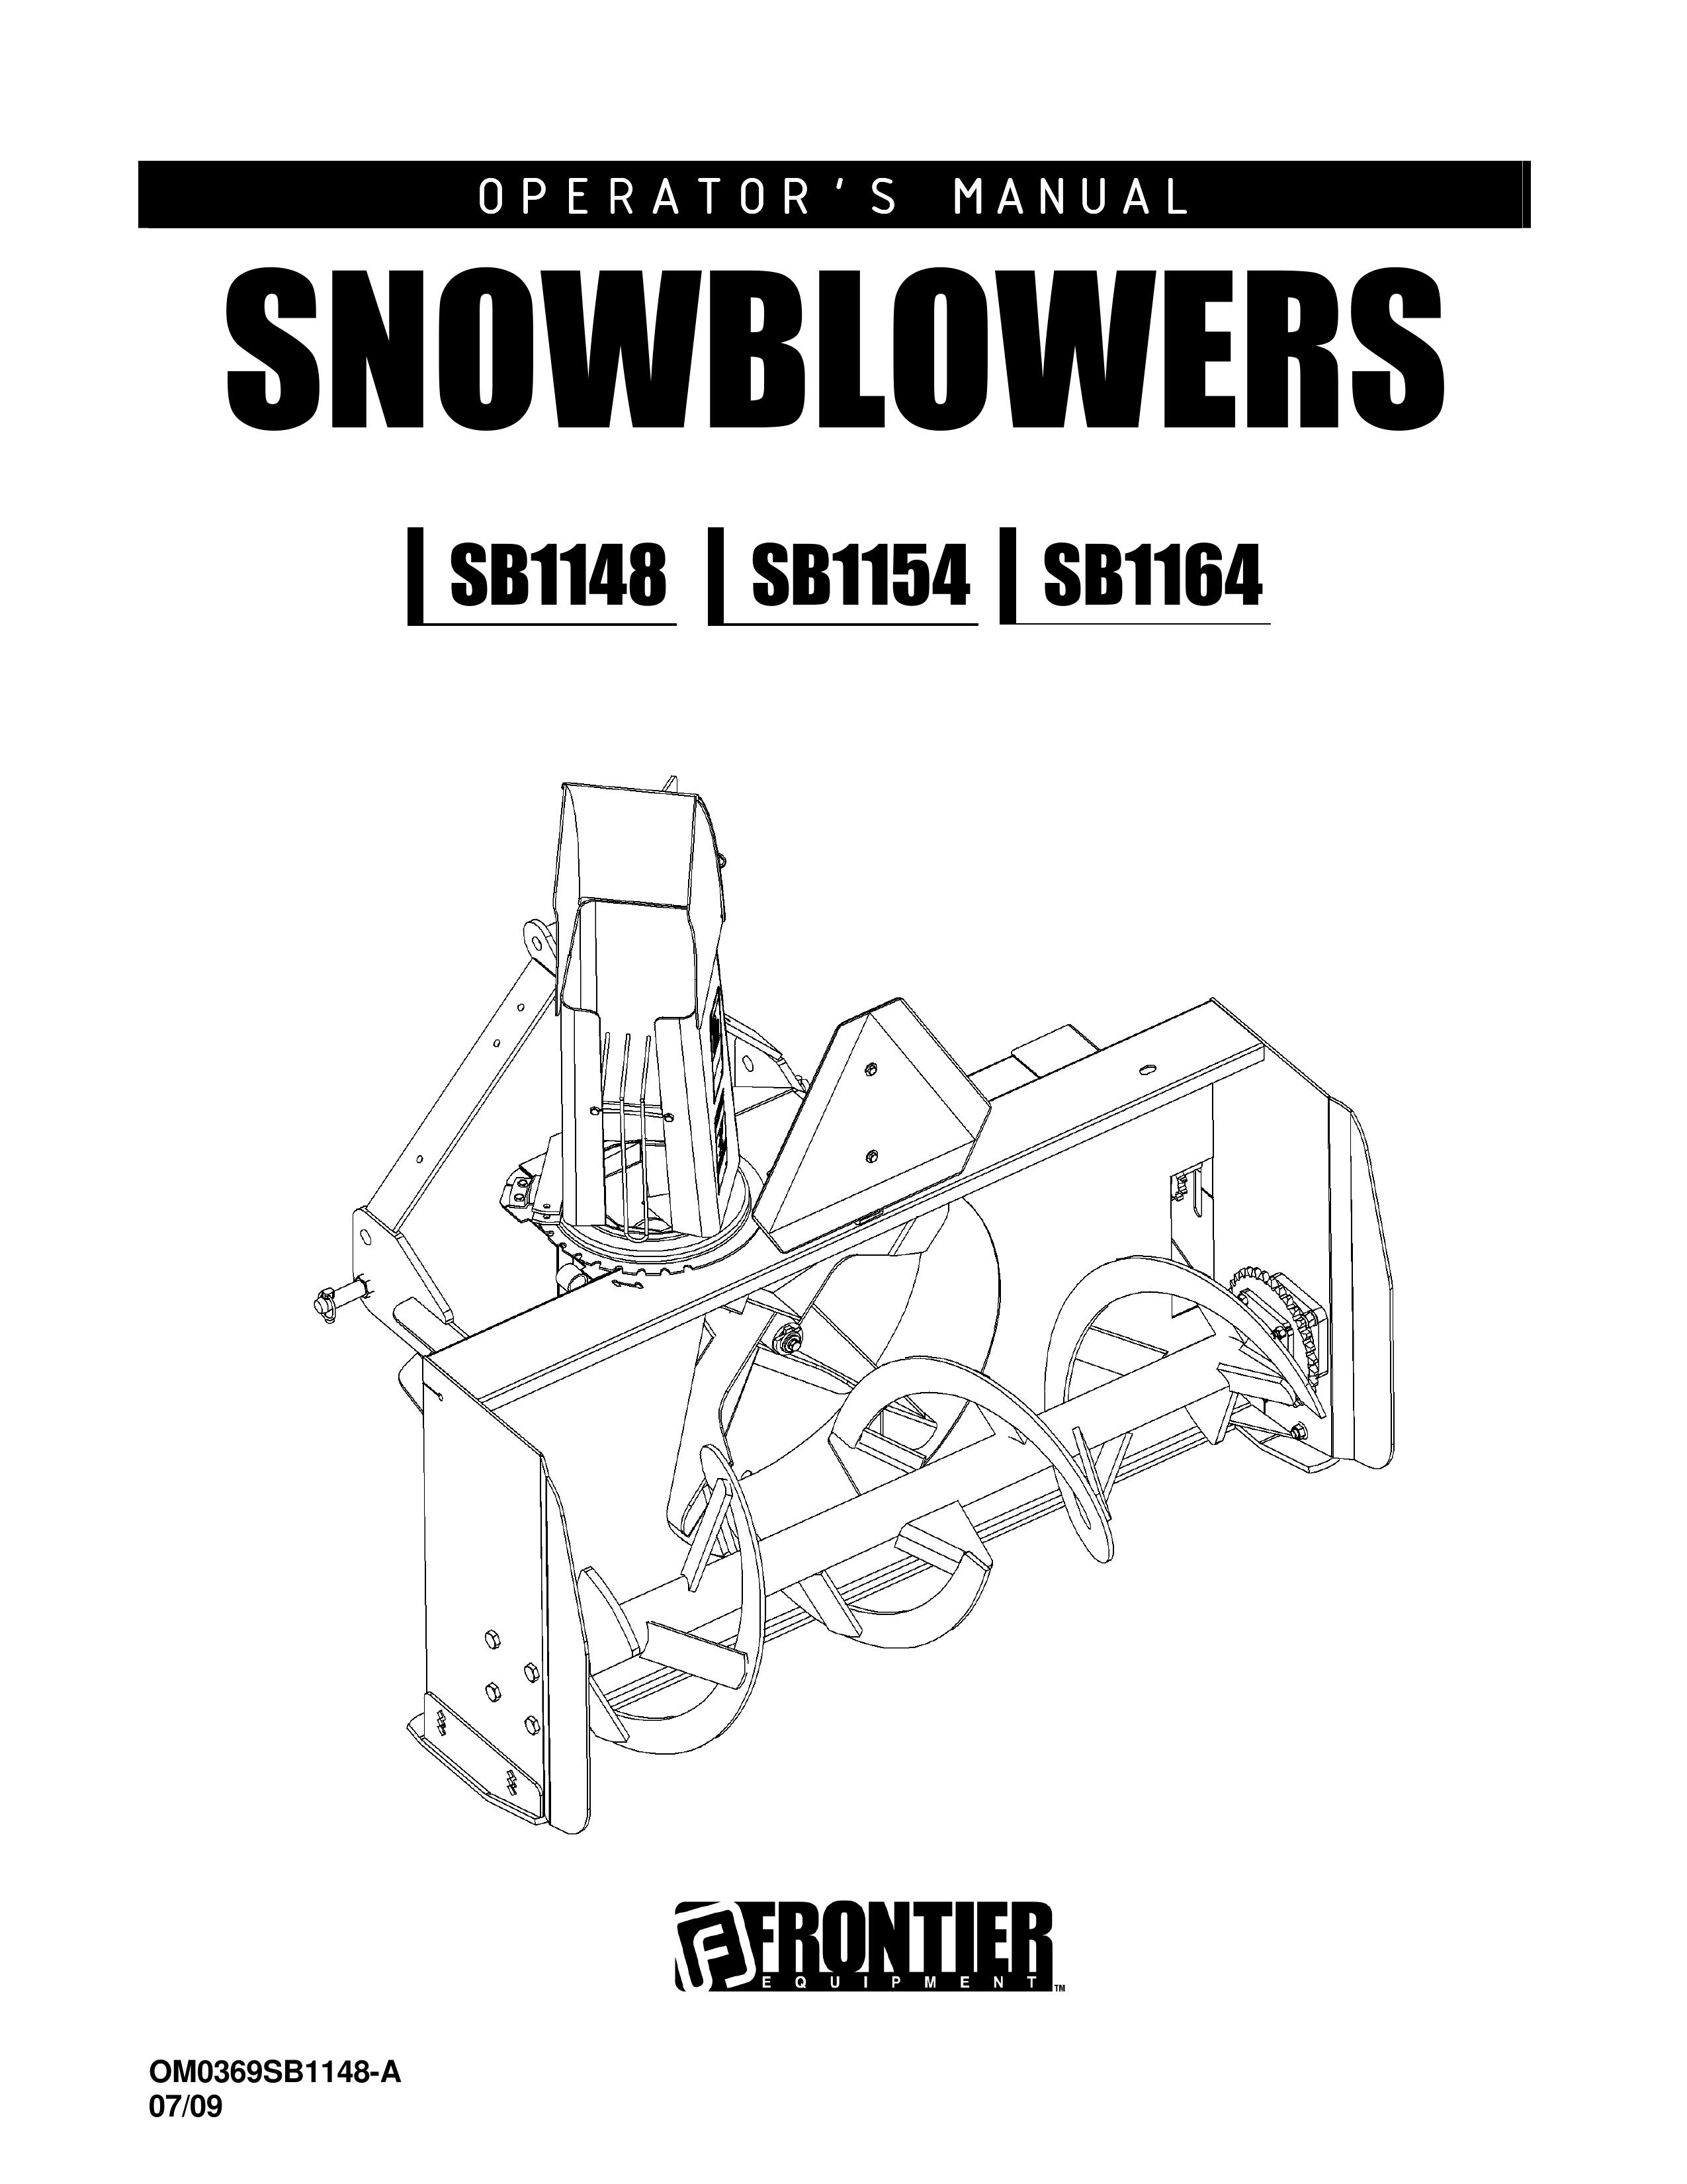 John Deere SB1148 Snow Blower User Manual